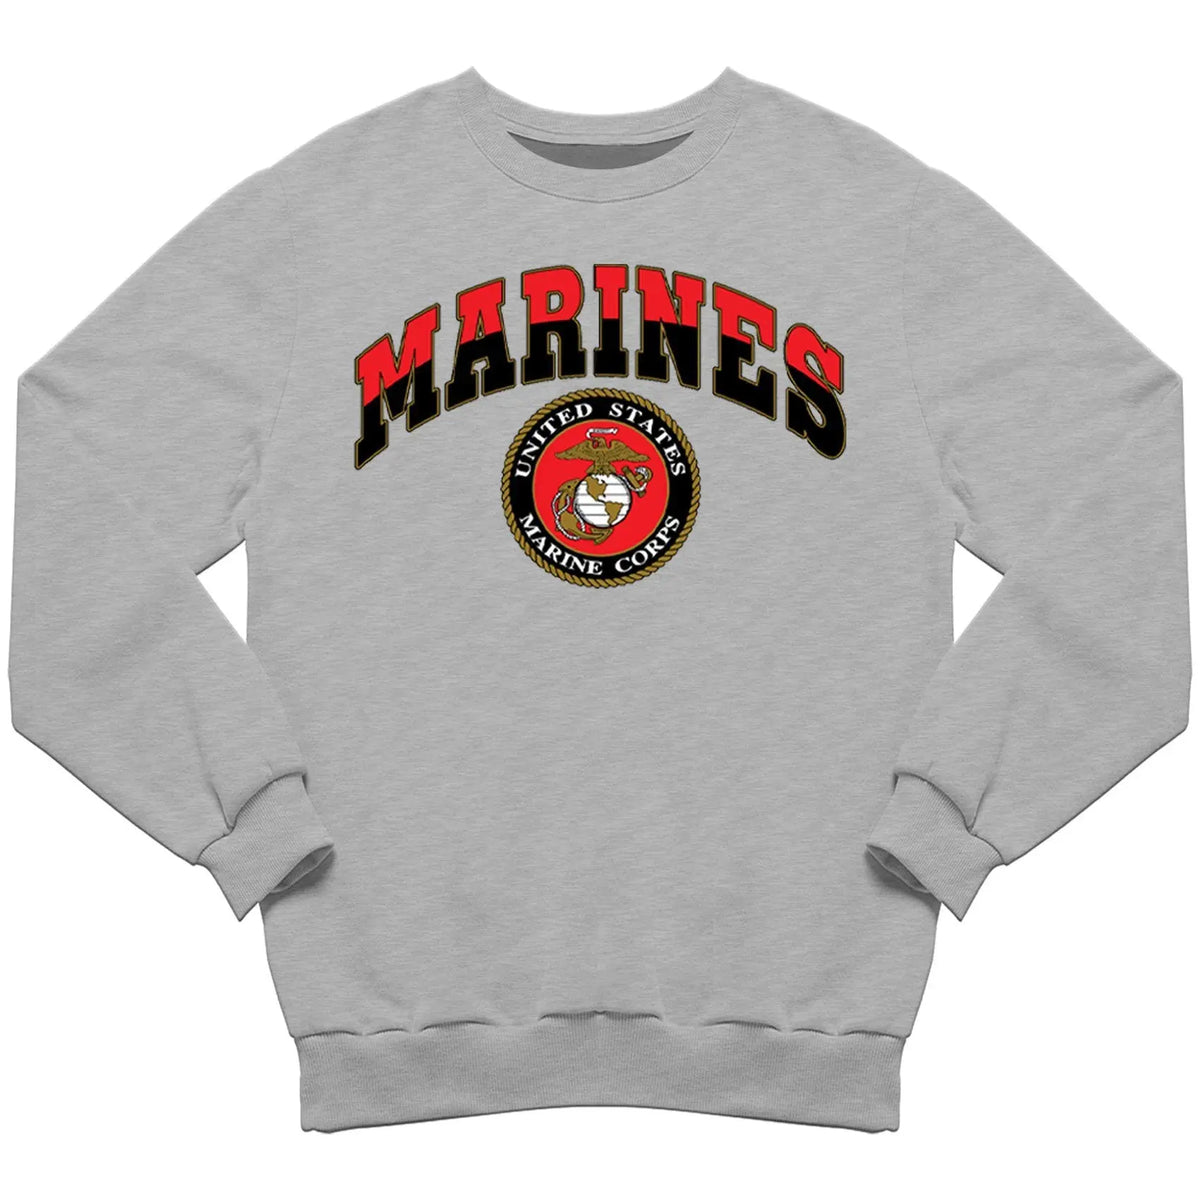 Classic Marine Corps Sweatshirt - Marine Corps Direct